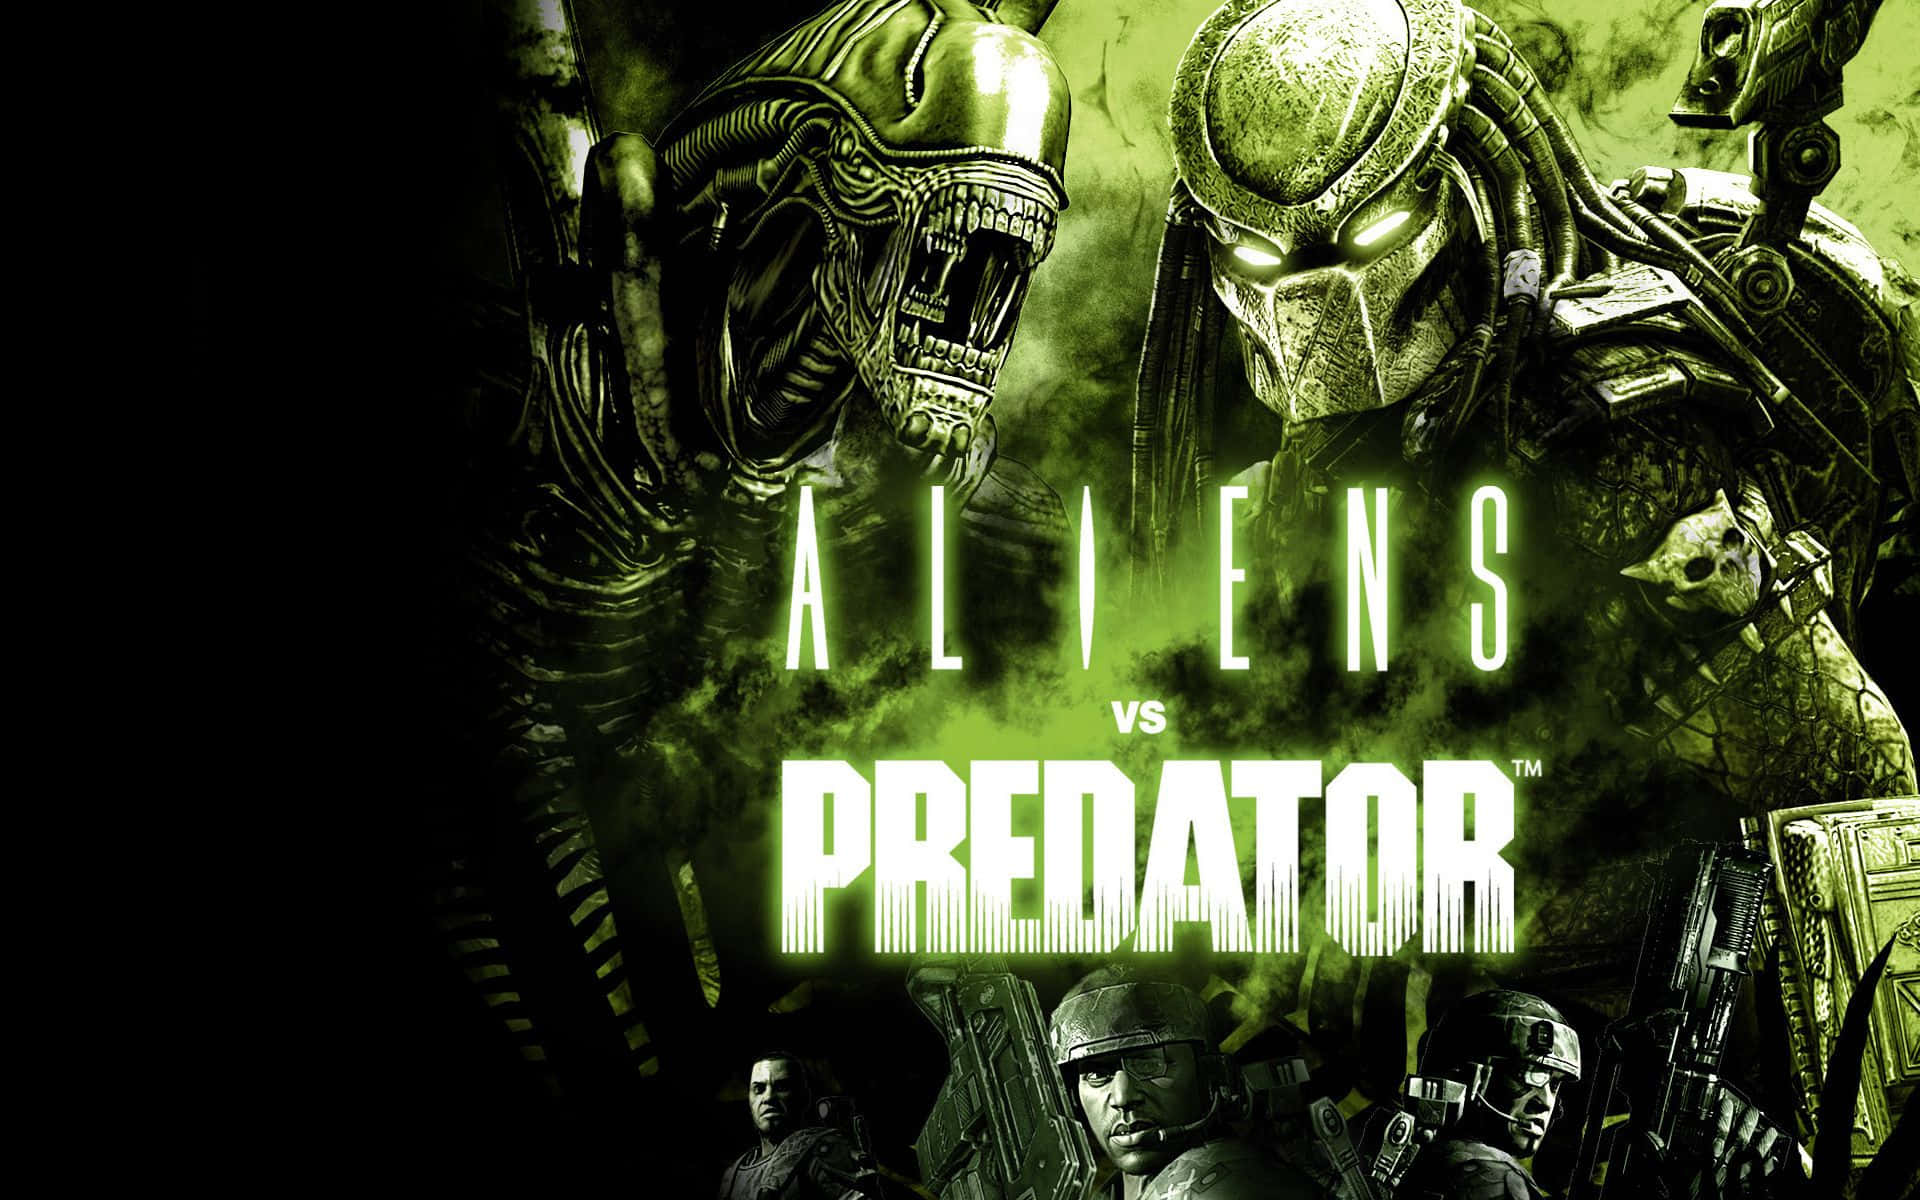 Movie Poster Of Alien Vs Predator Wallpaper